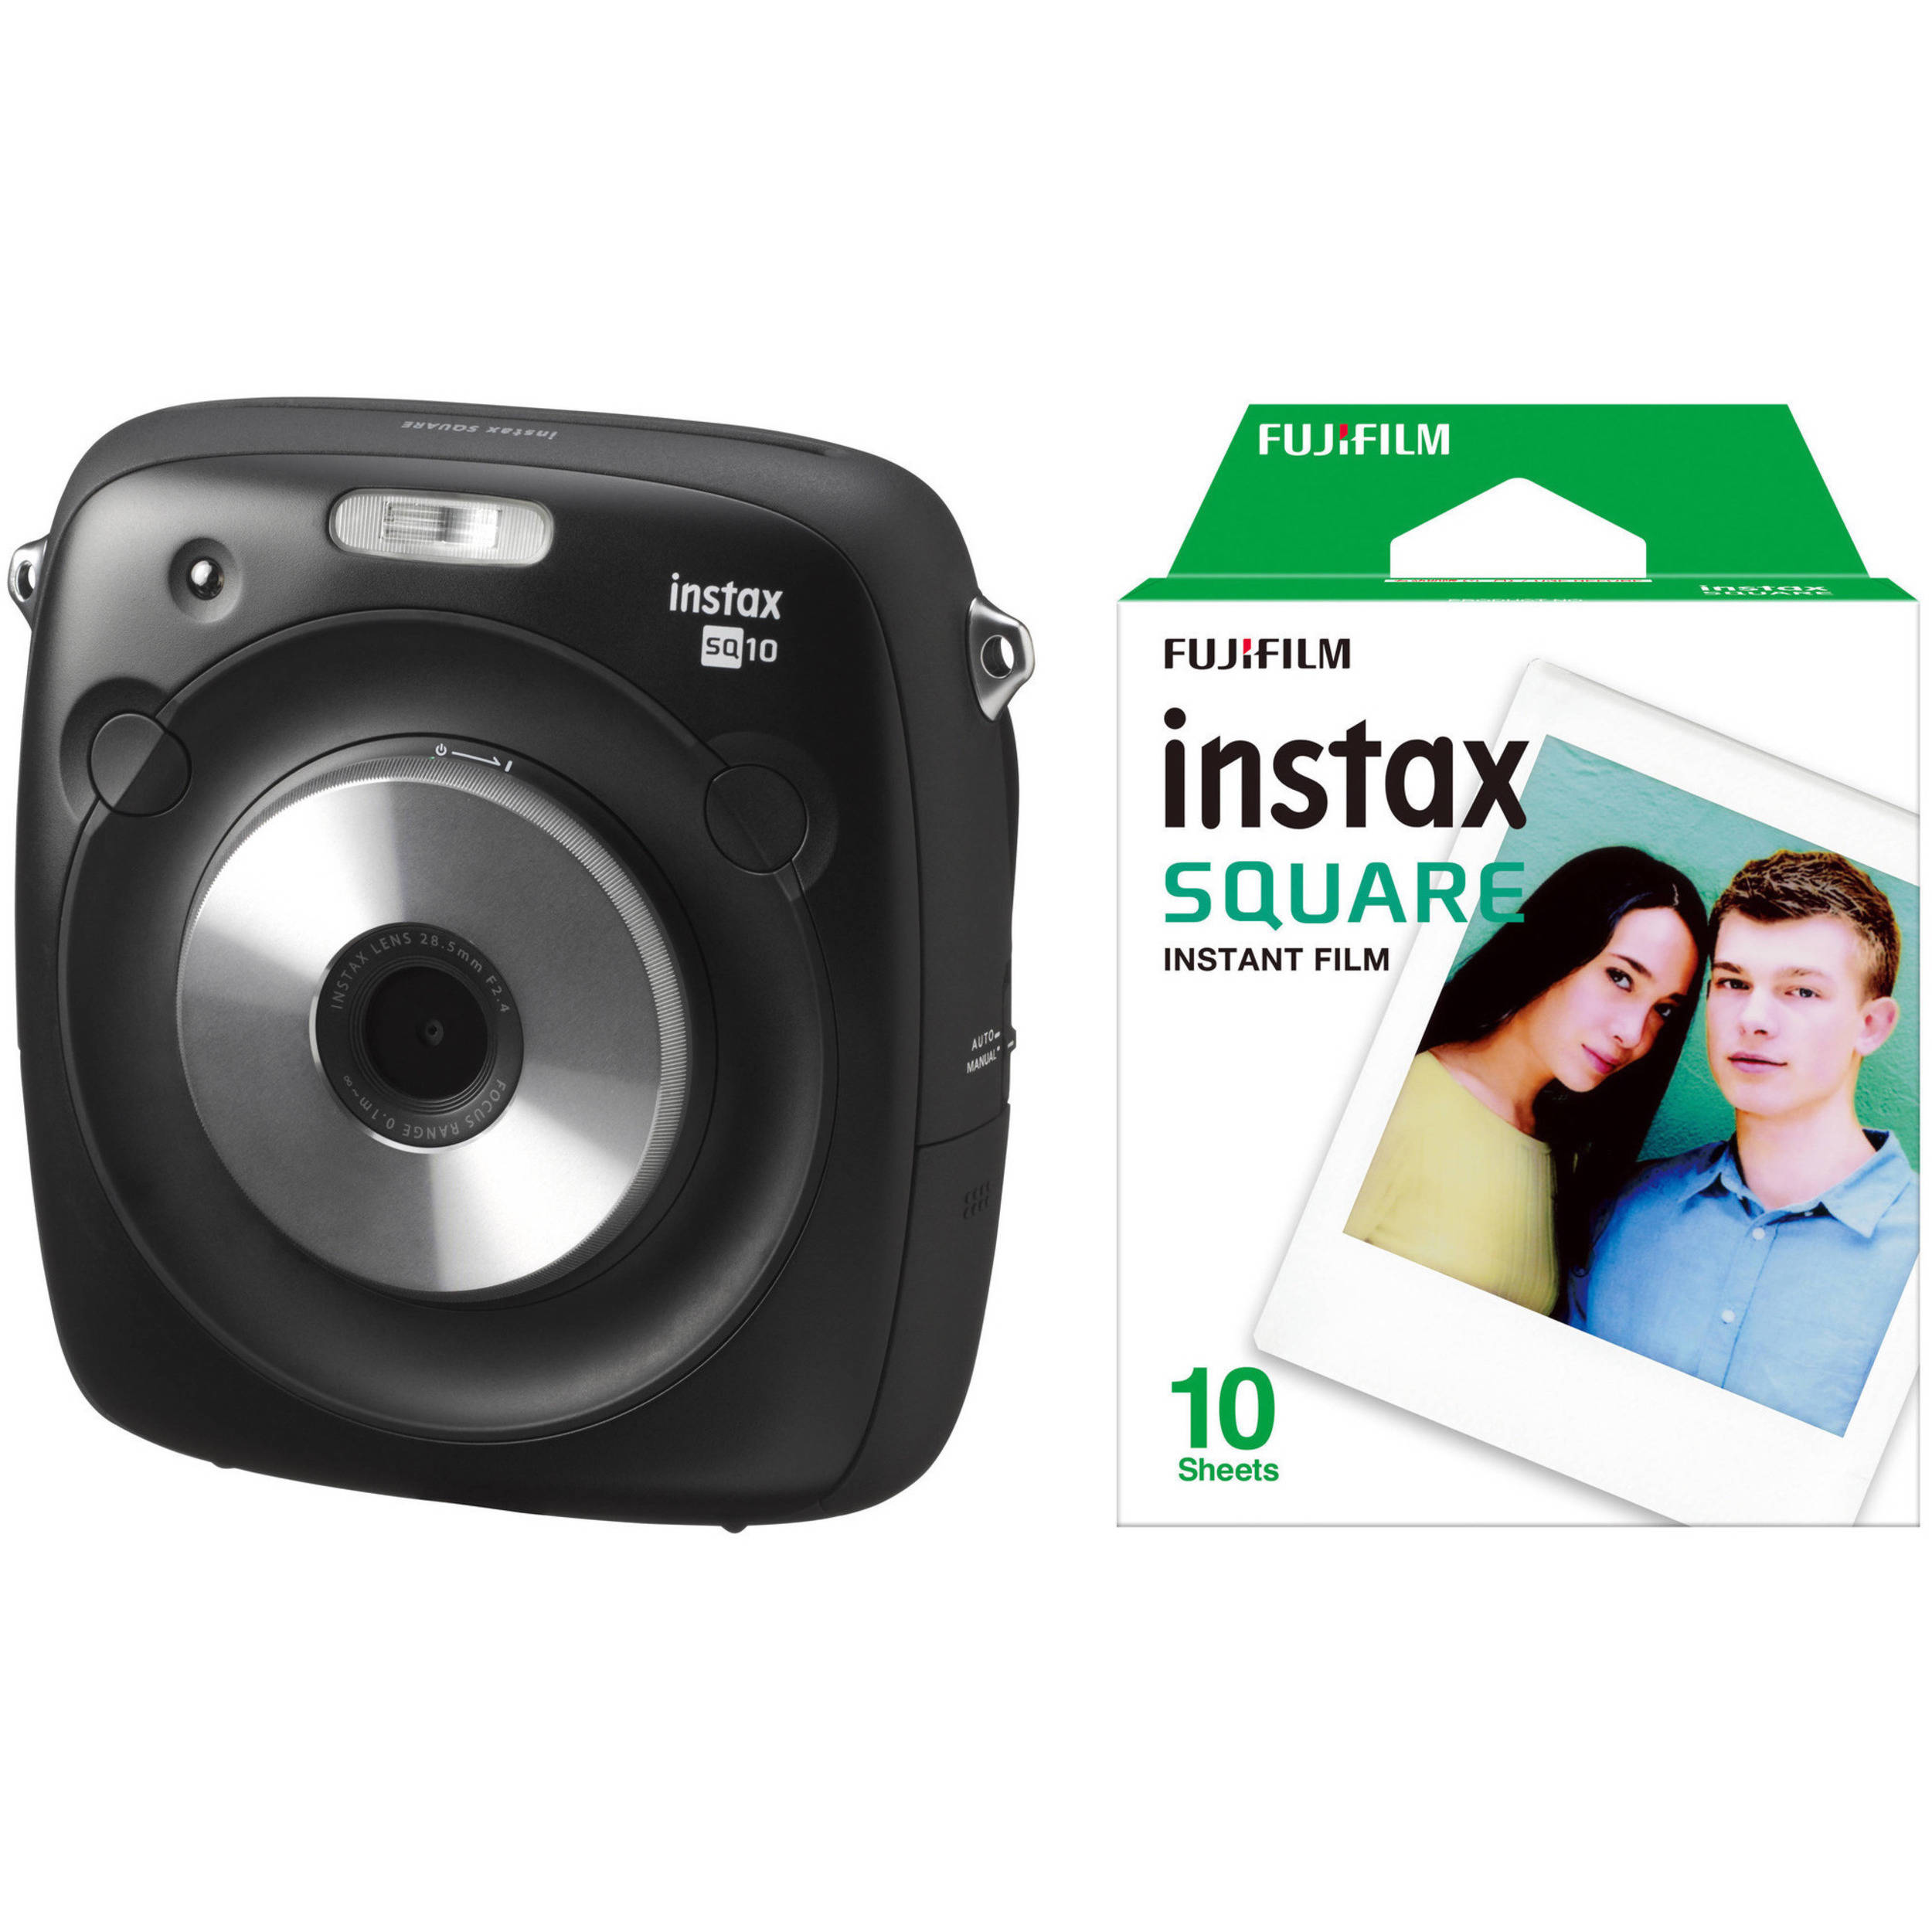 Fujifilm Instax Square SQ10 Review